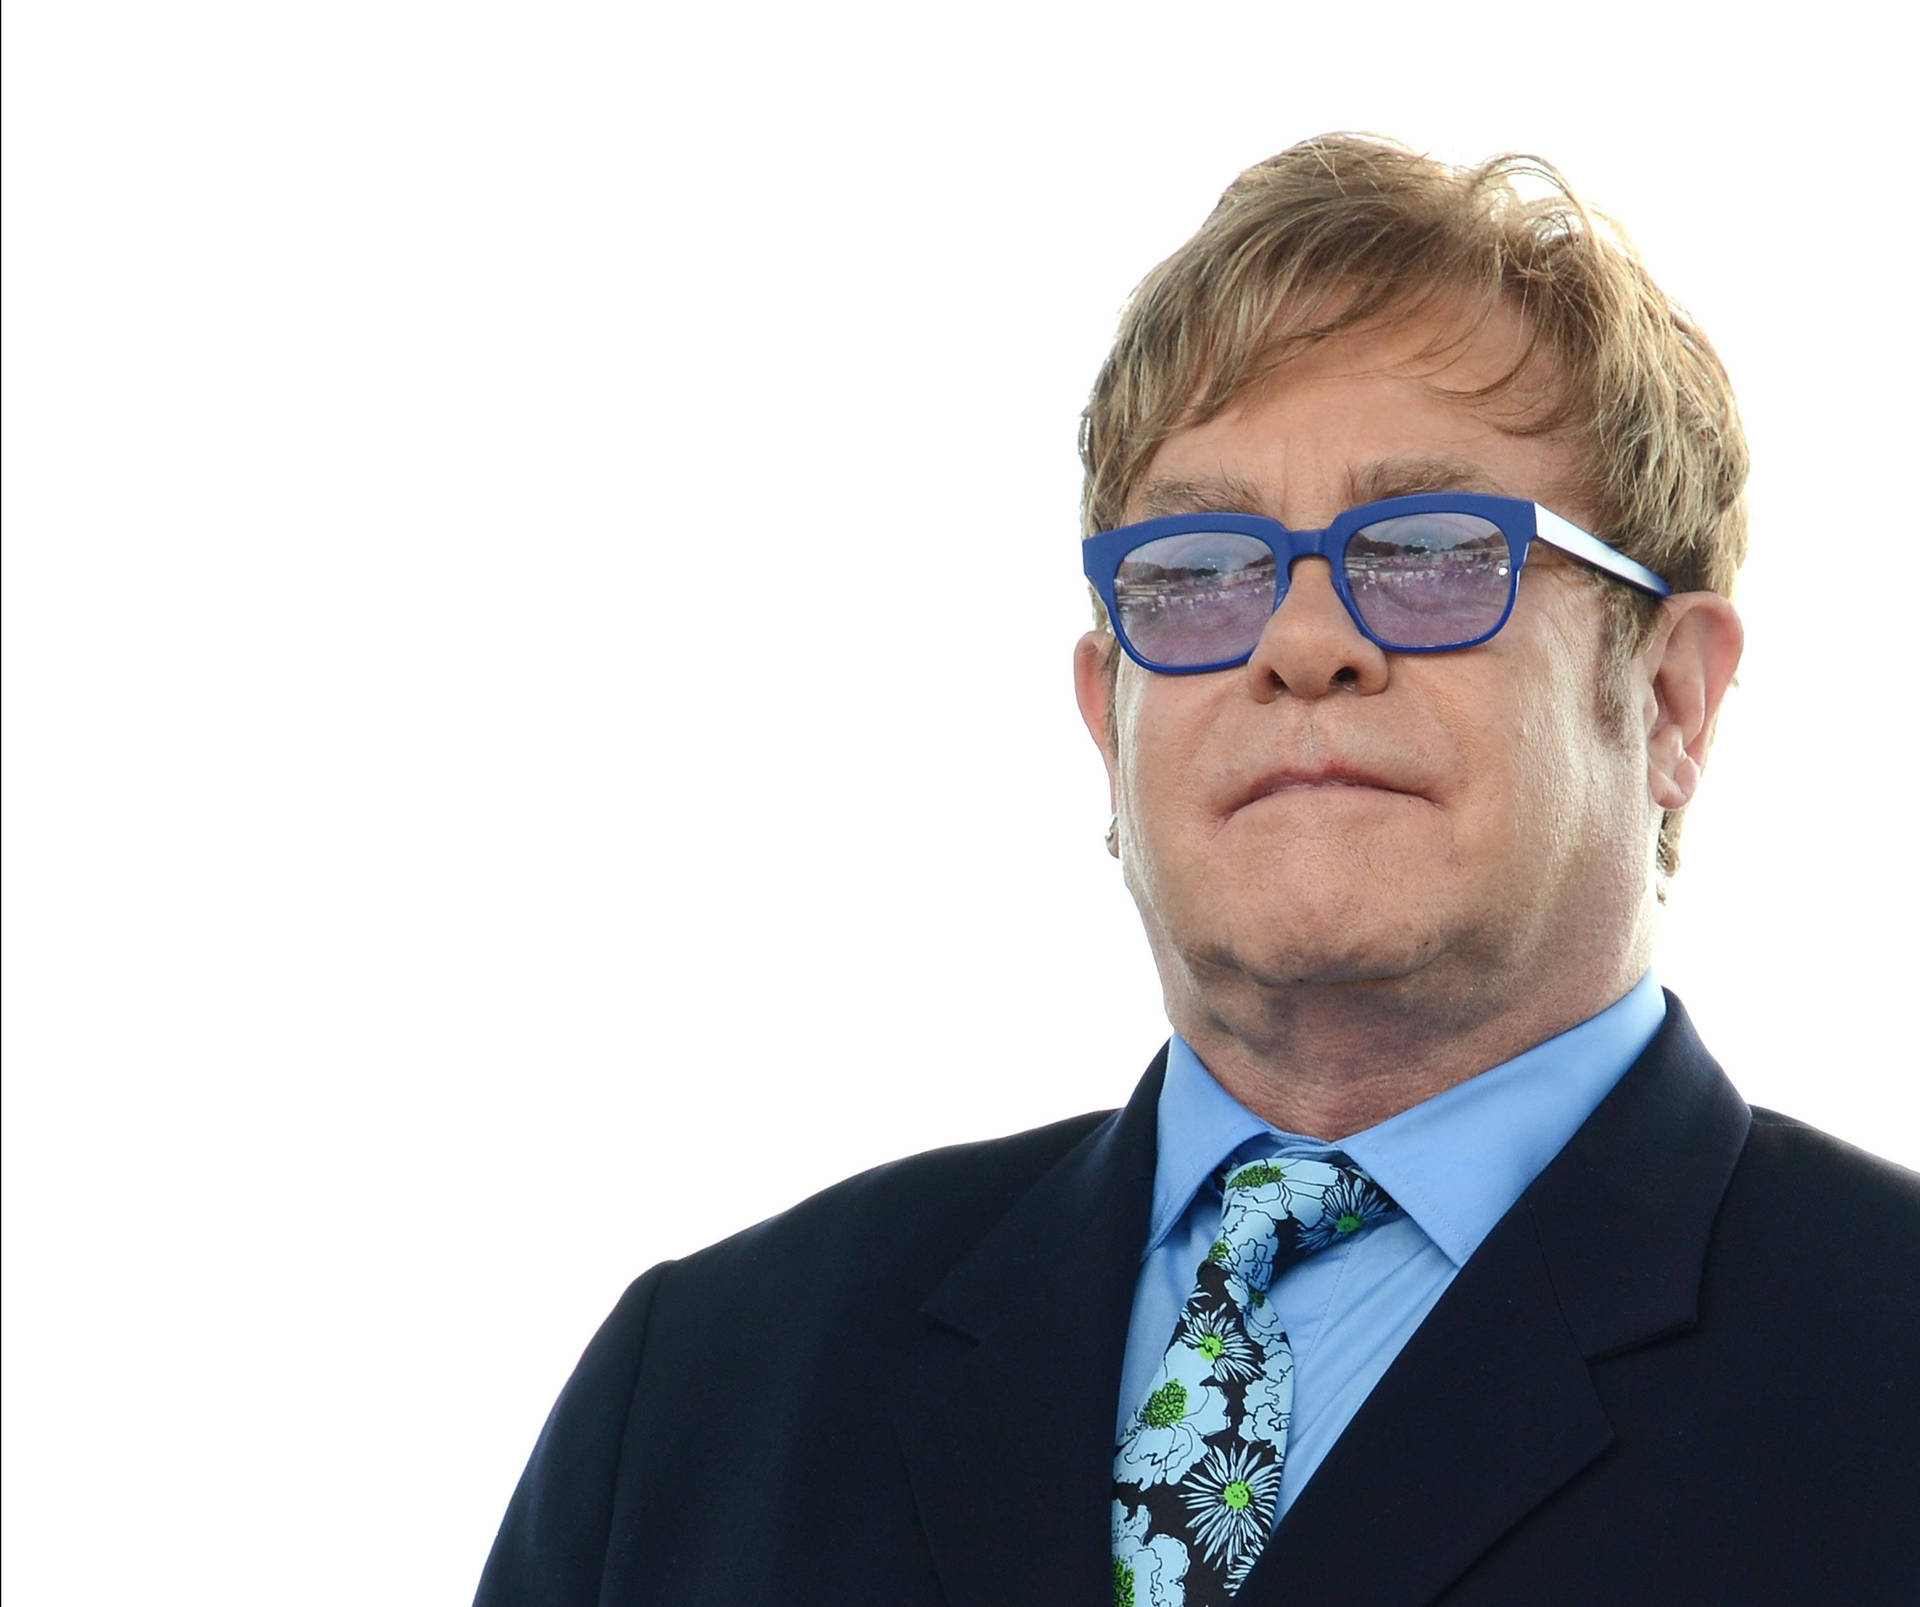 Elton John Formal Headshot Background